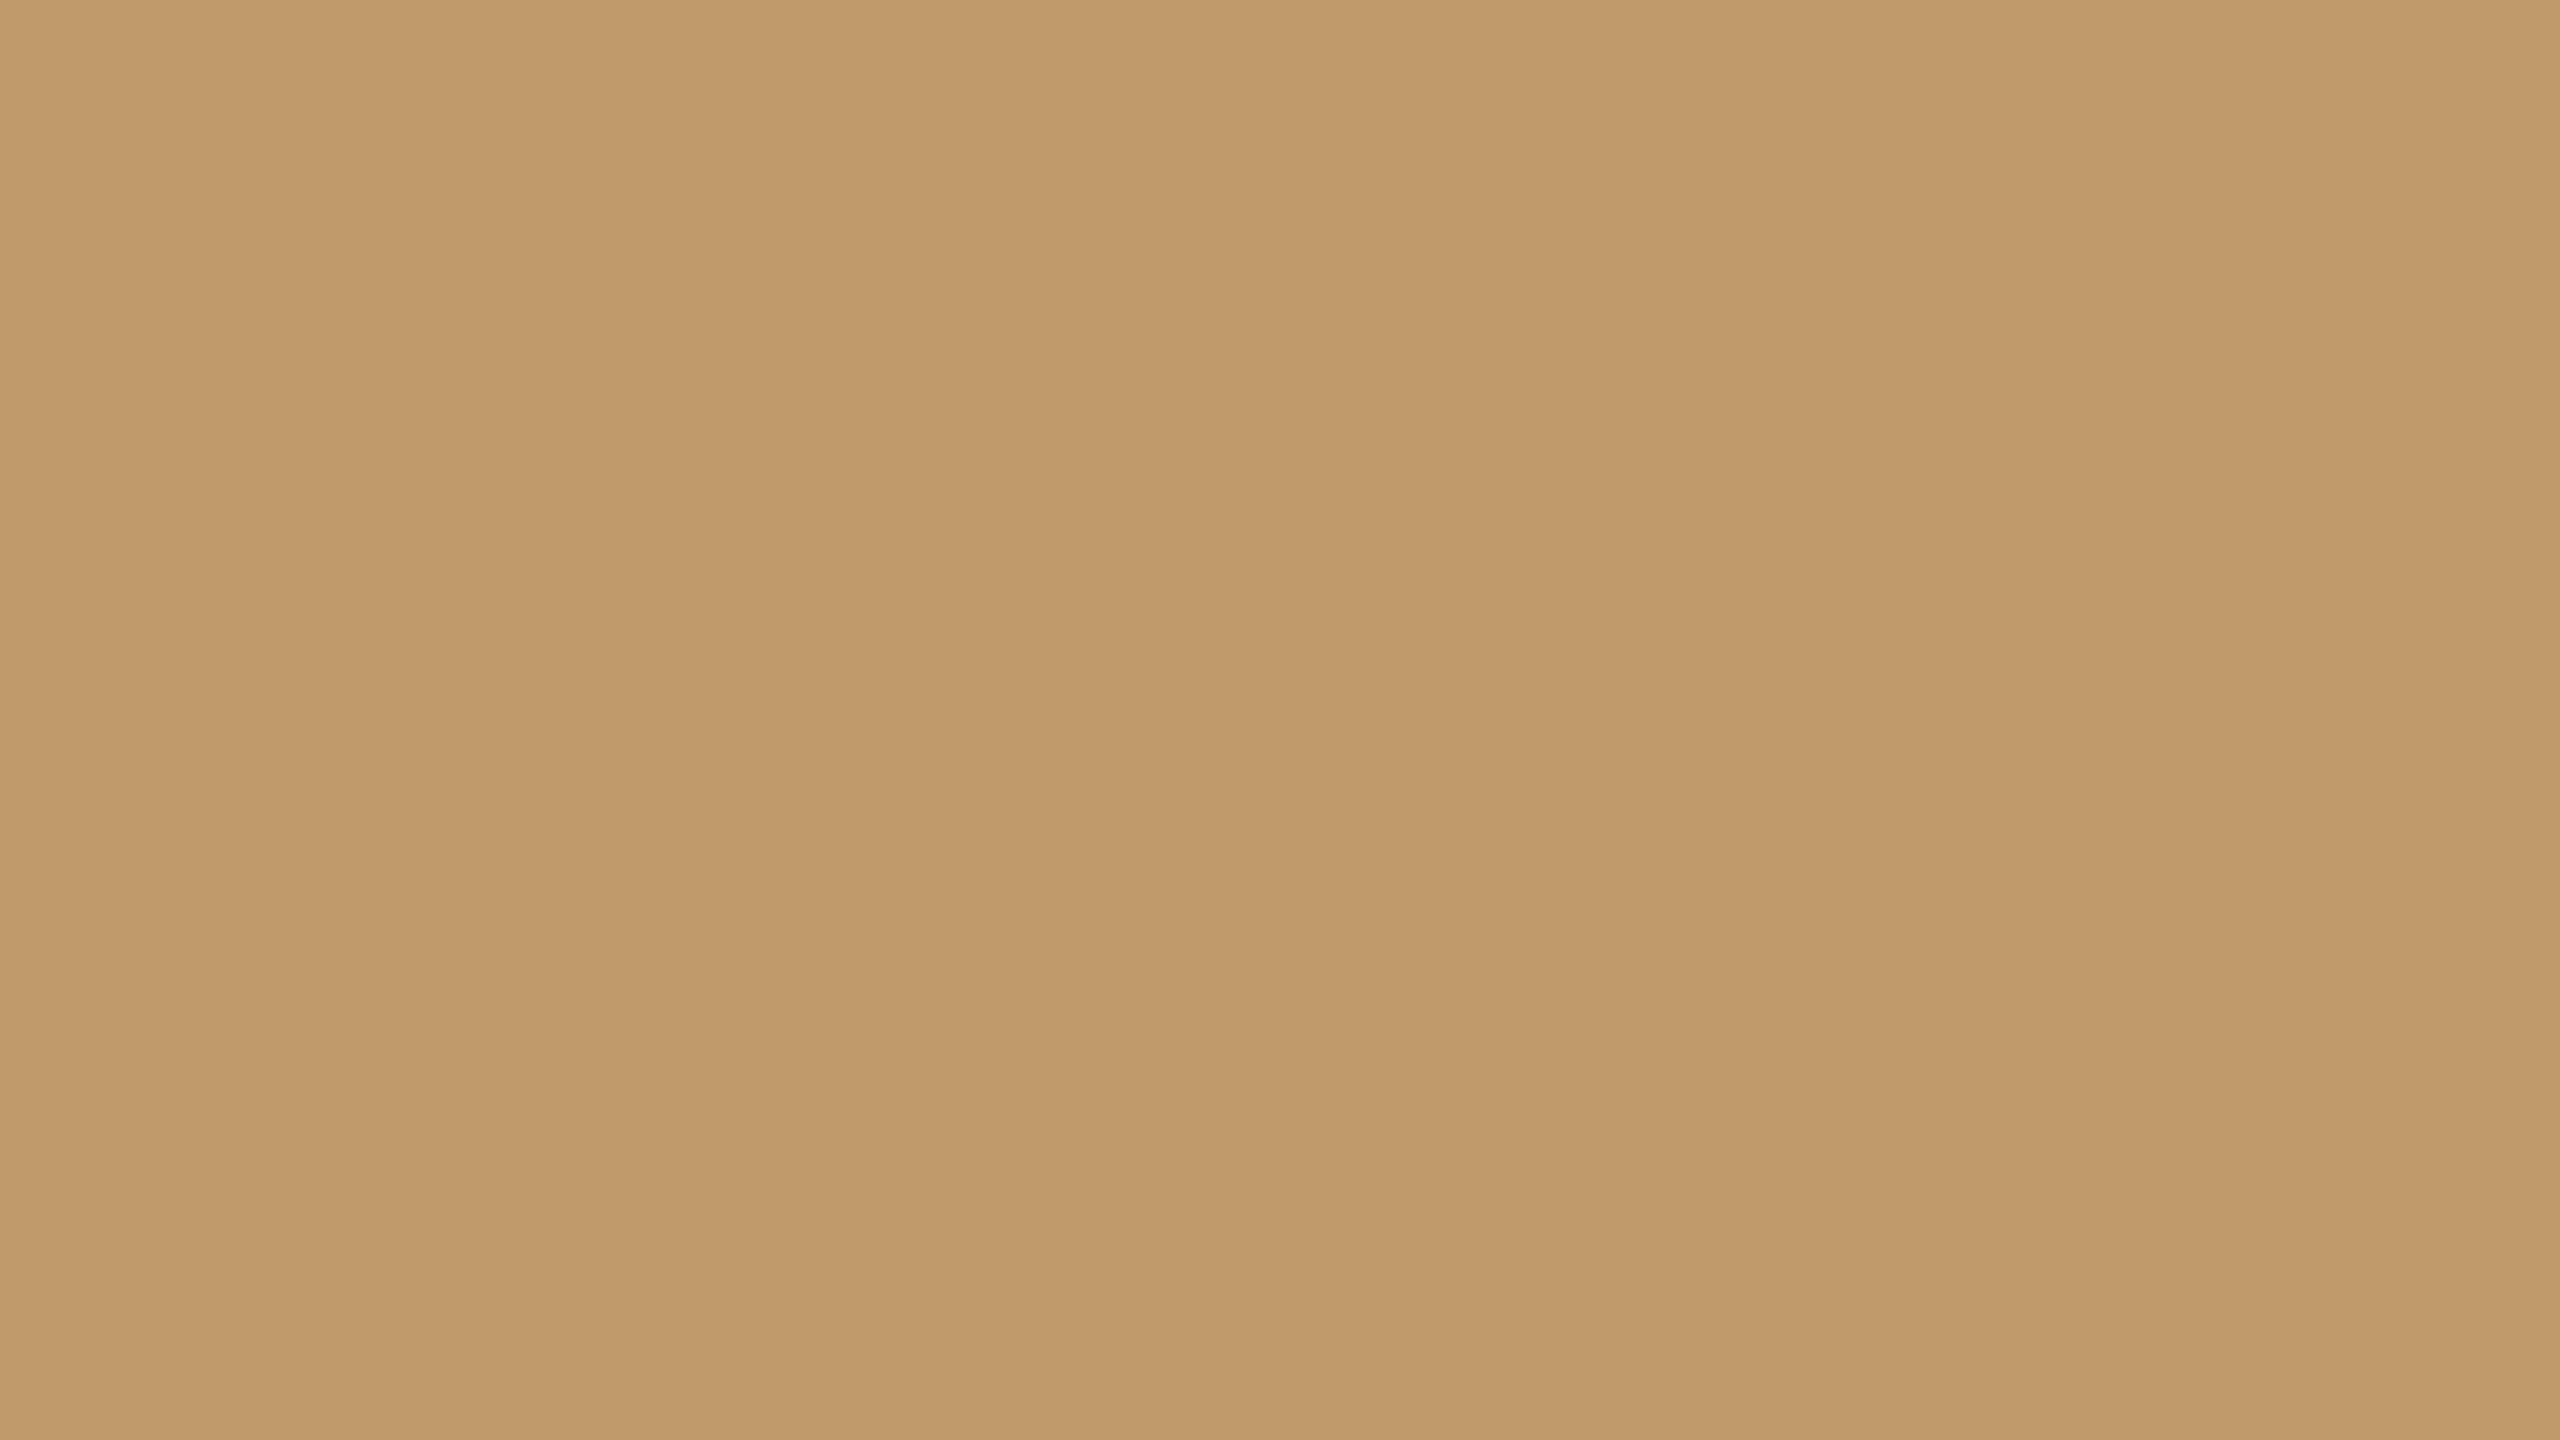 2560x1440 plain brown background 6025